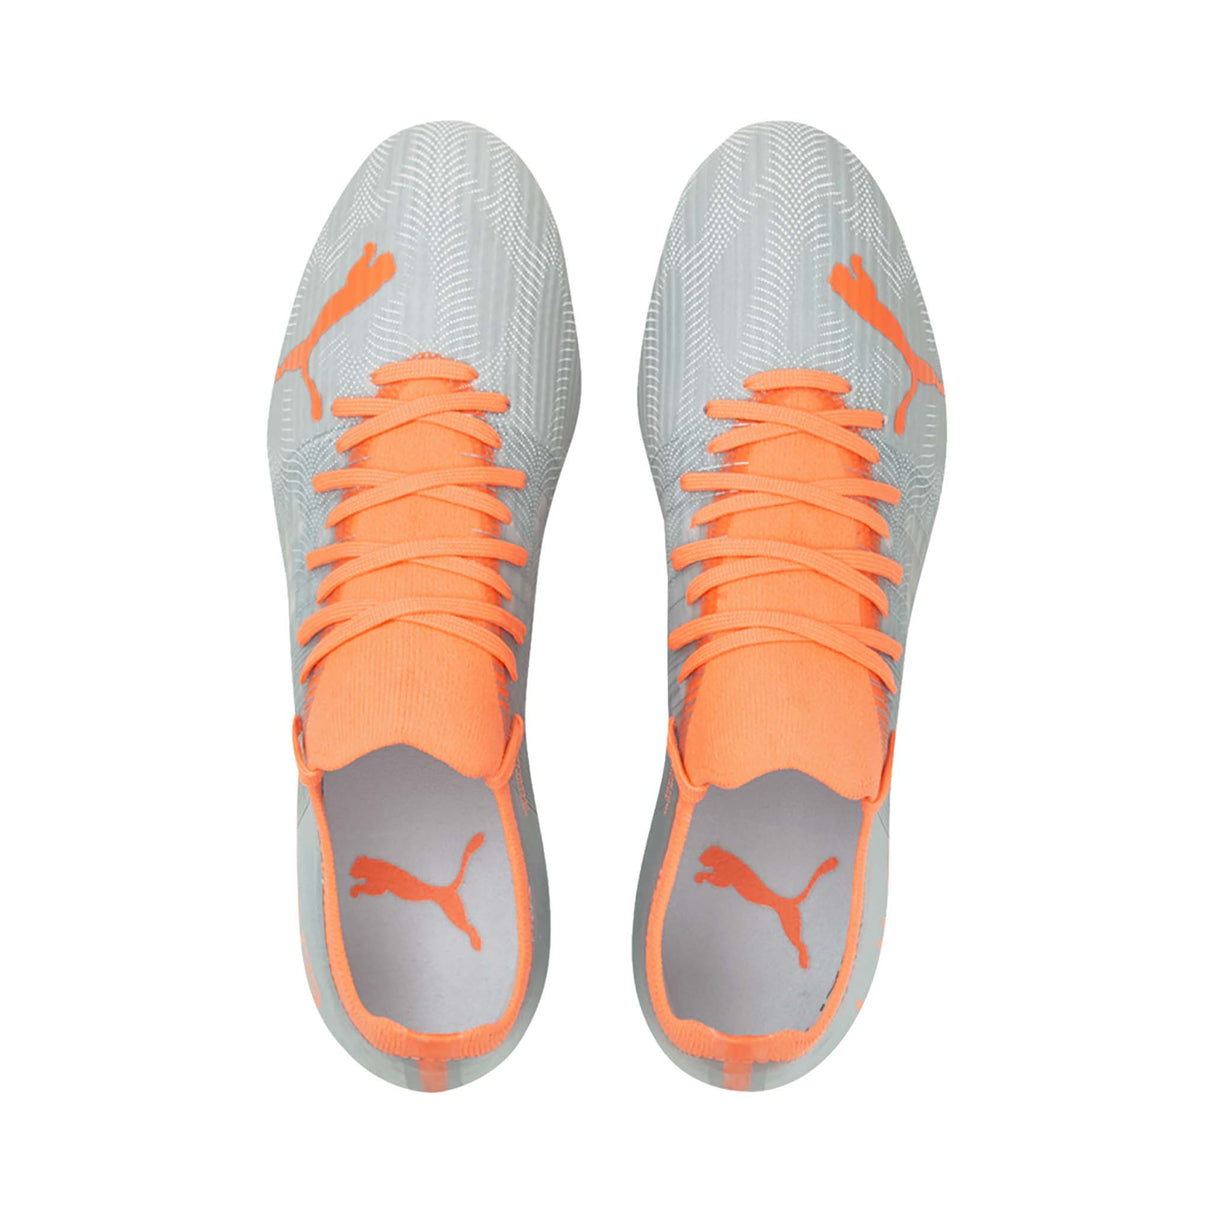 Puma Ultra 3.4 FG/AG chaussures de soccer adulte diamond silver orange empeigne